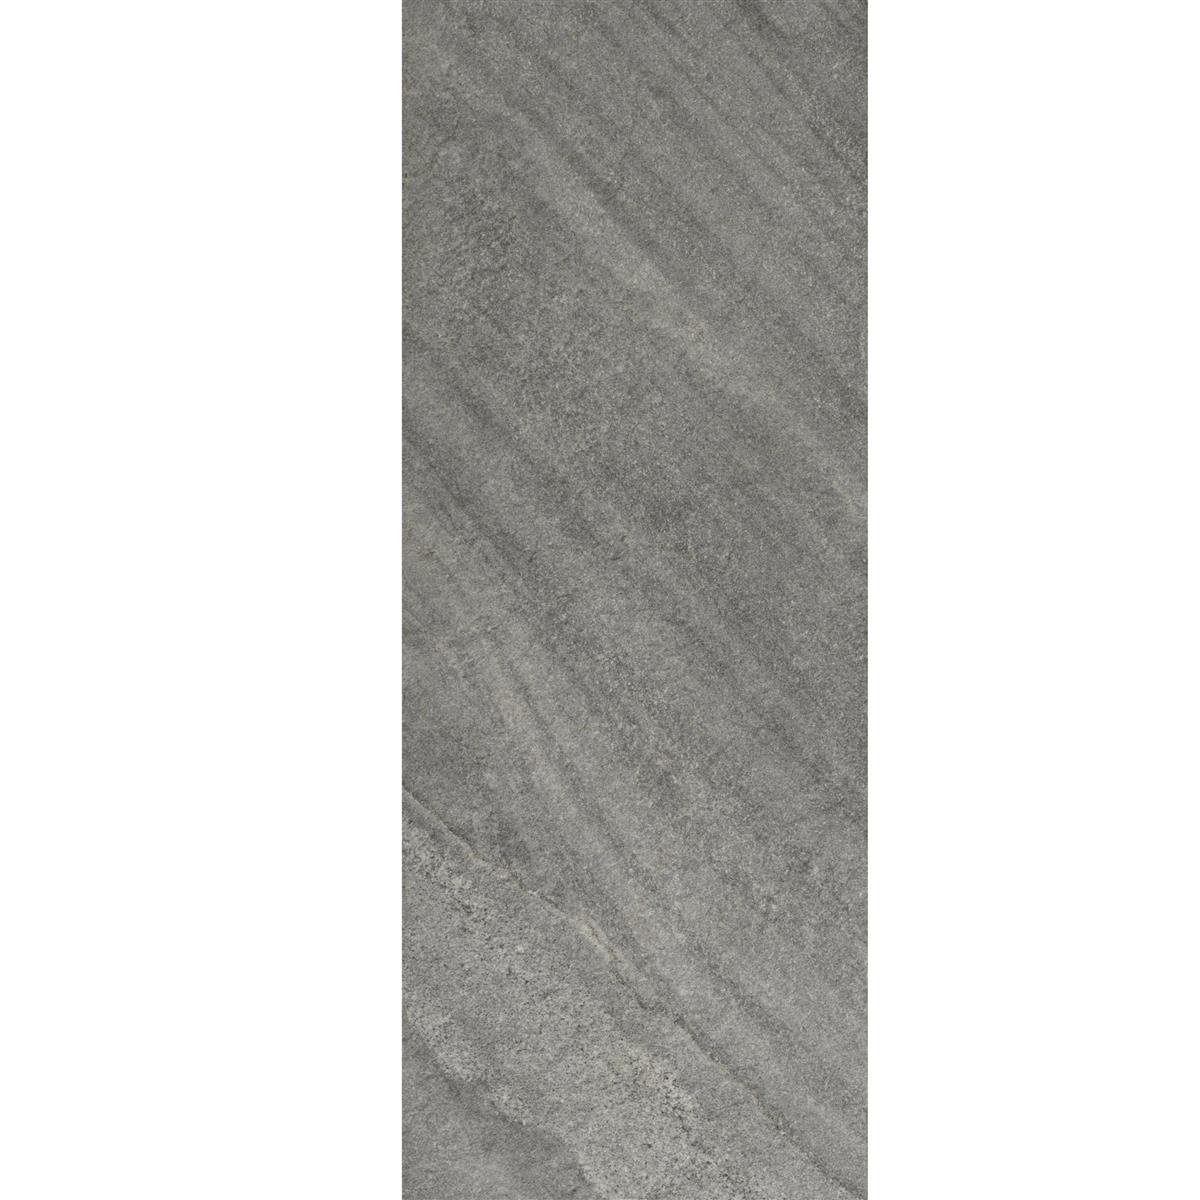 Terrace Tiles Germiyan Grey 40x120x2cm